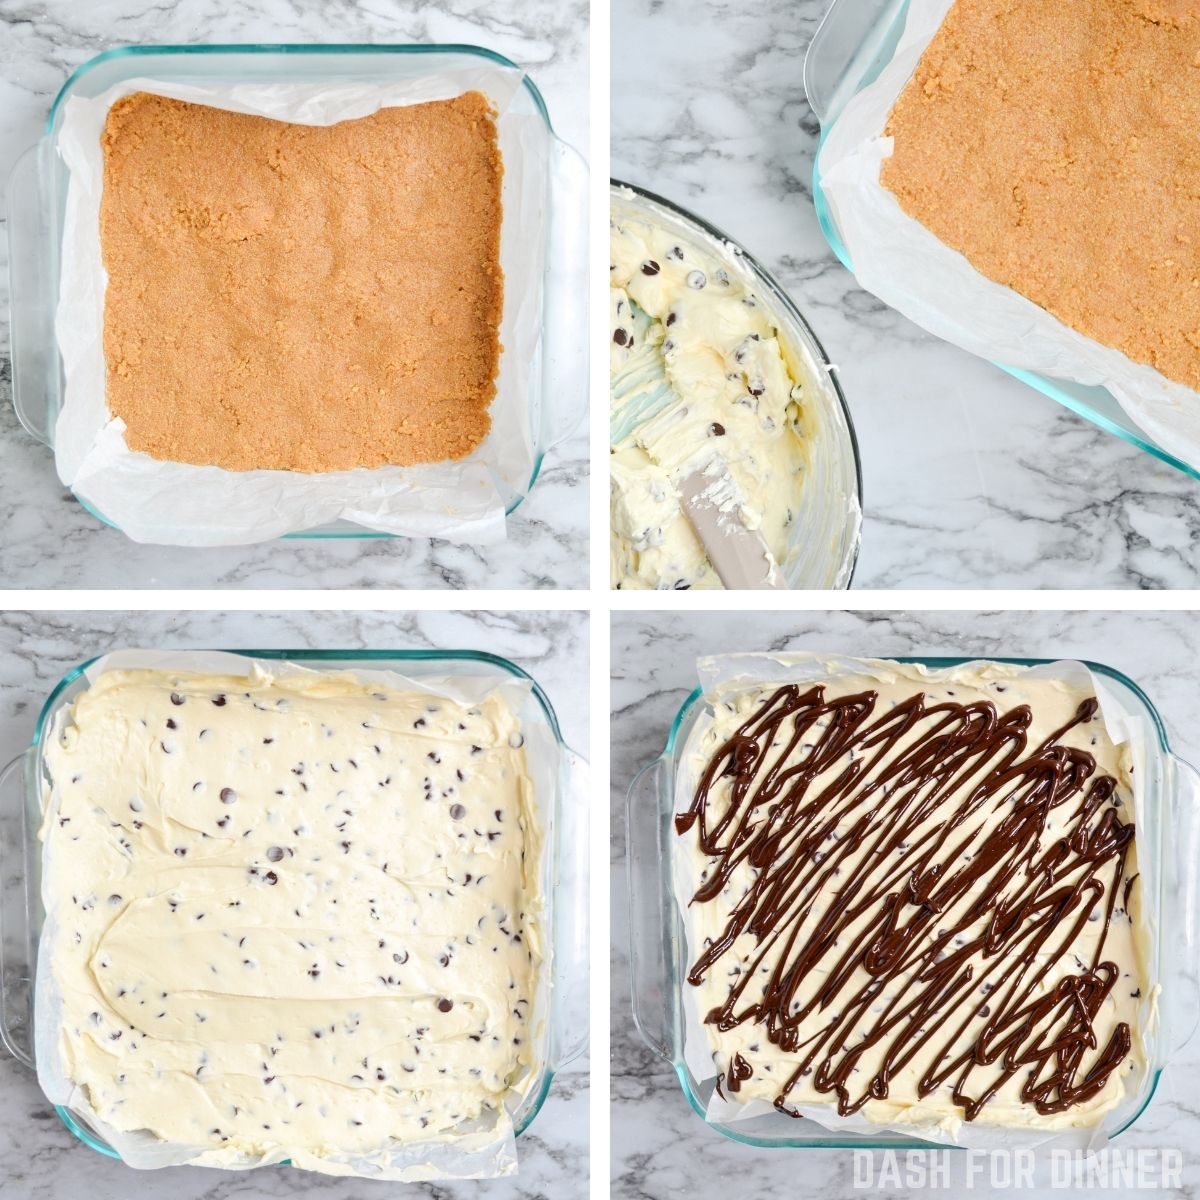 How to make a no bake chocolate chip cheesecake